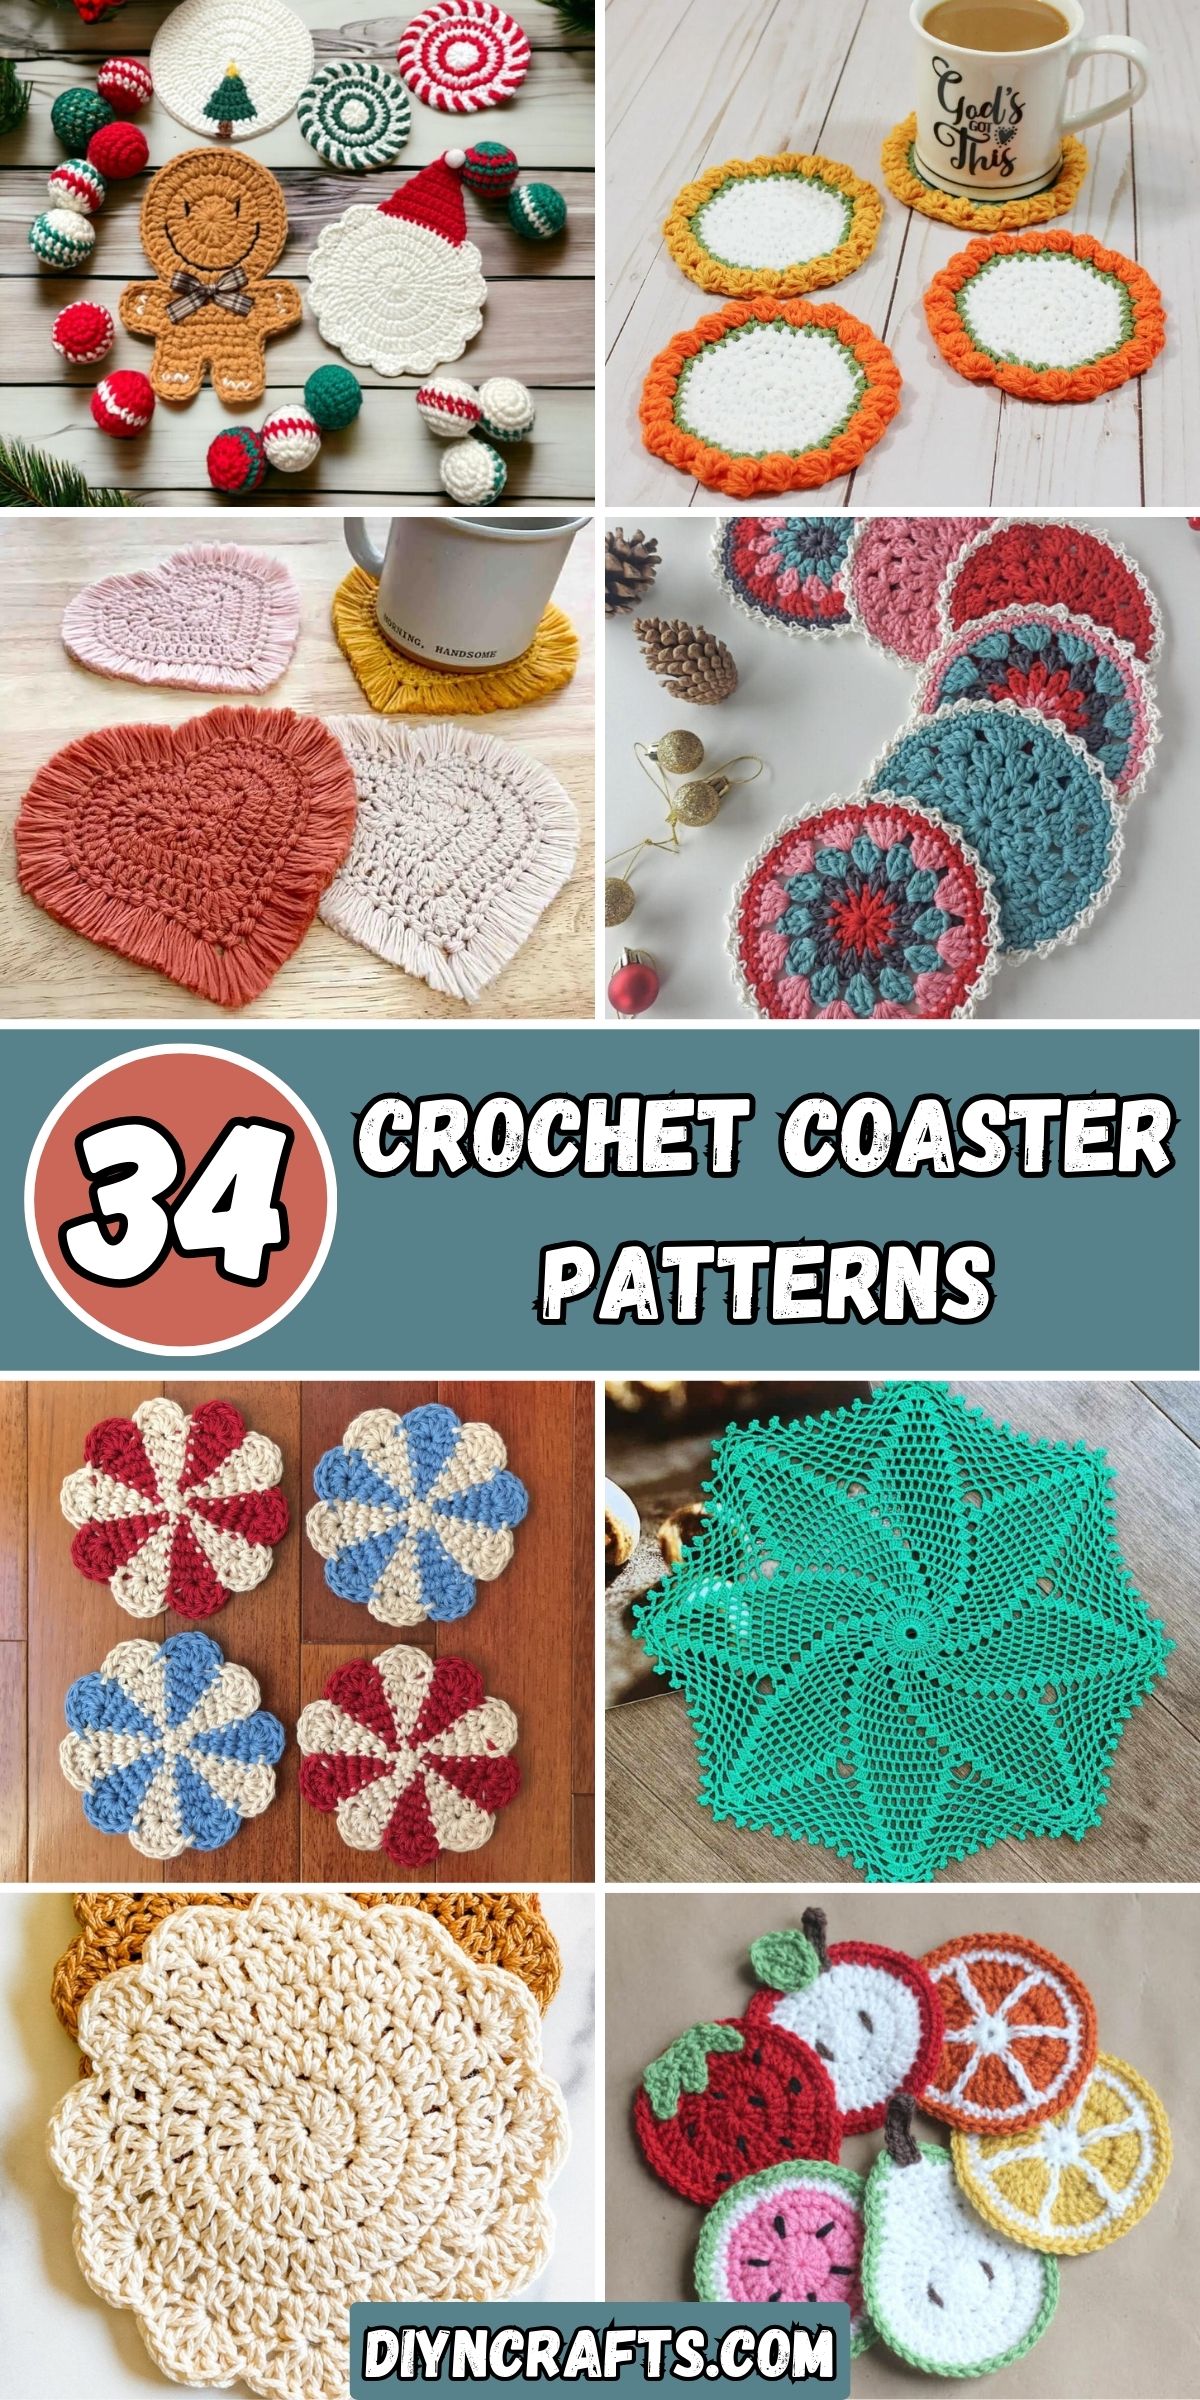 34 Crochet Coaster Patterns collage.